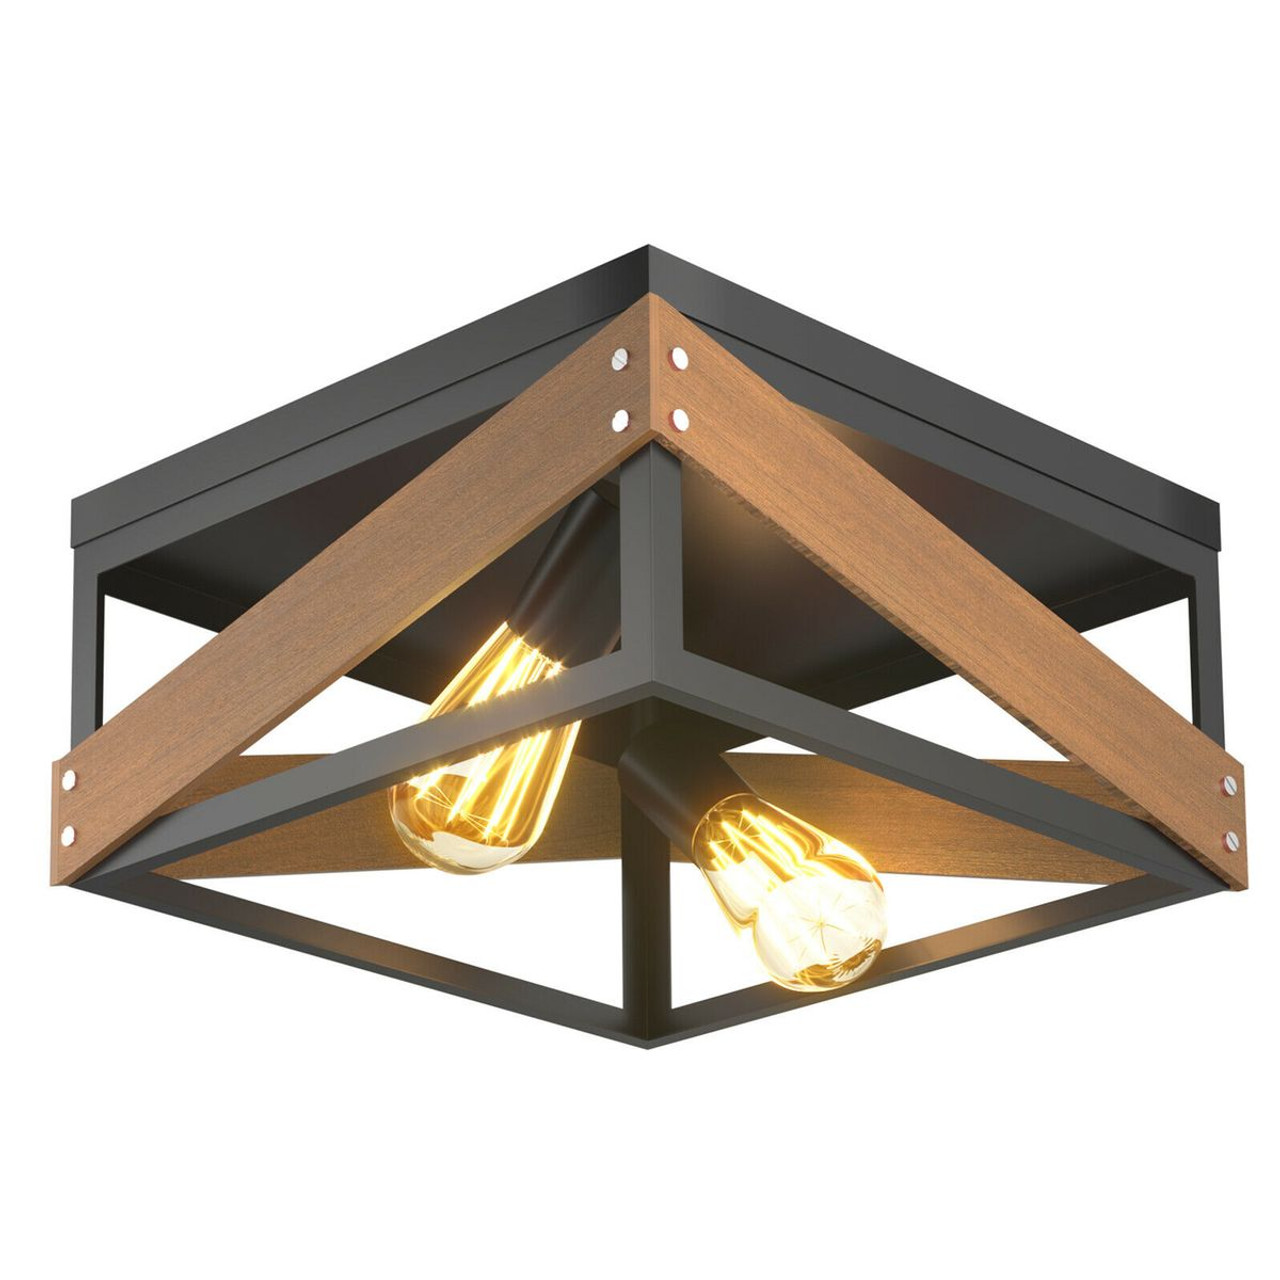 Adjustable Geometric Ceiling Lamp product image